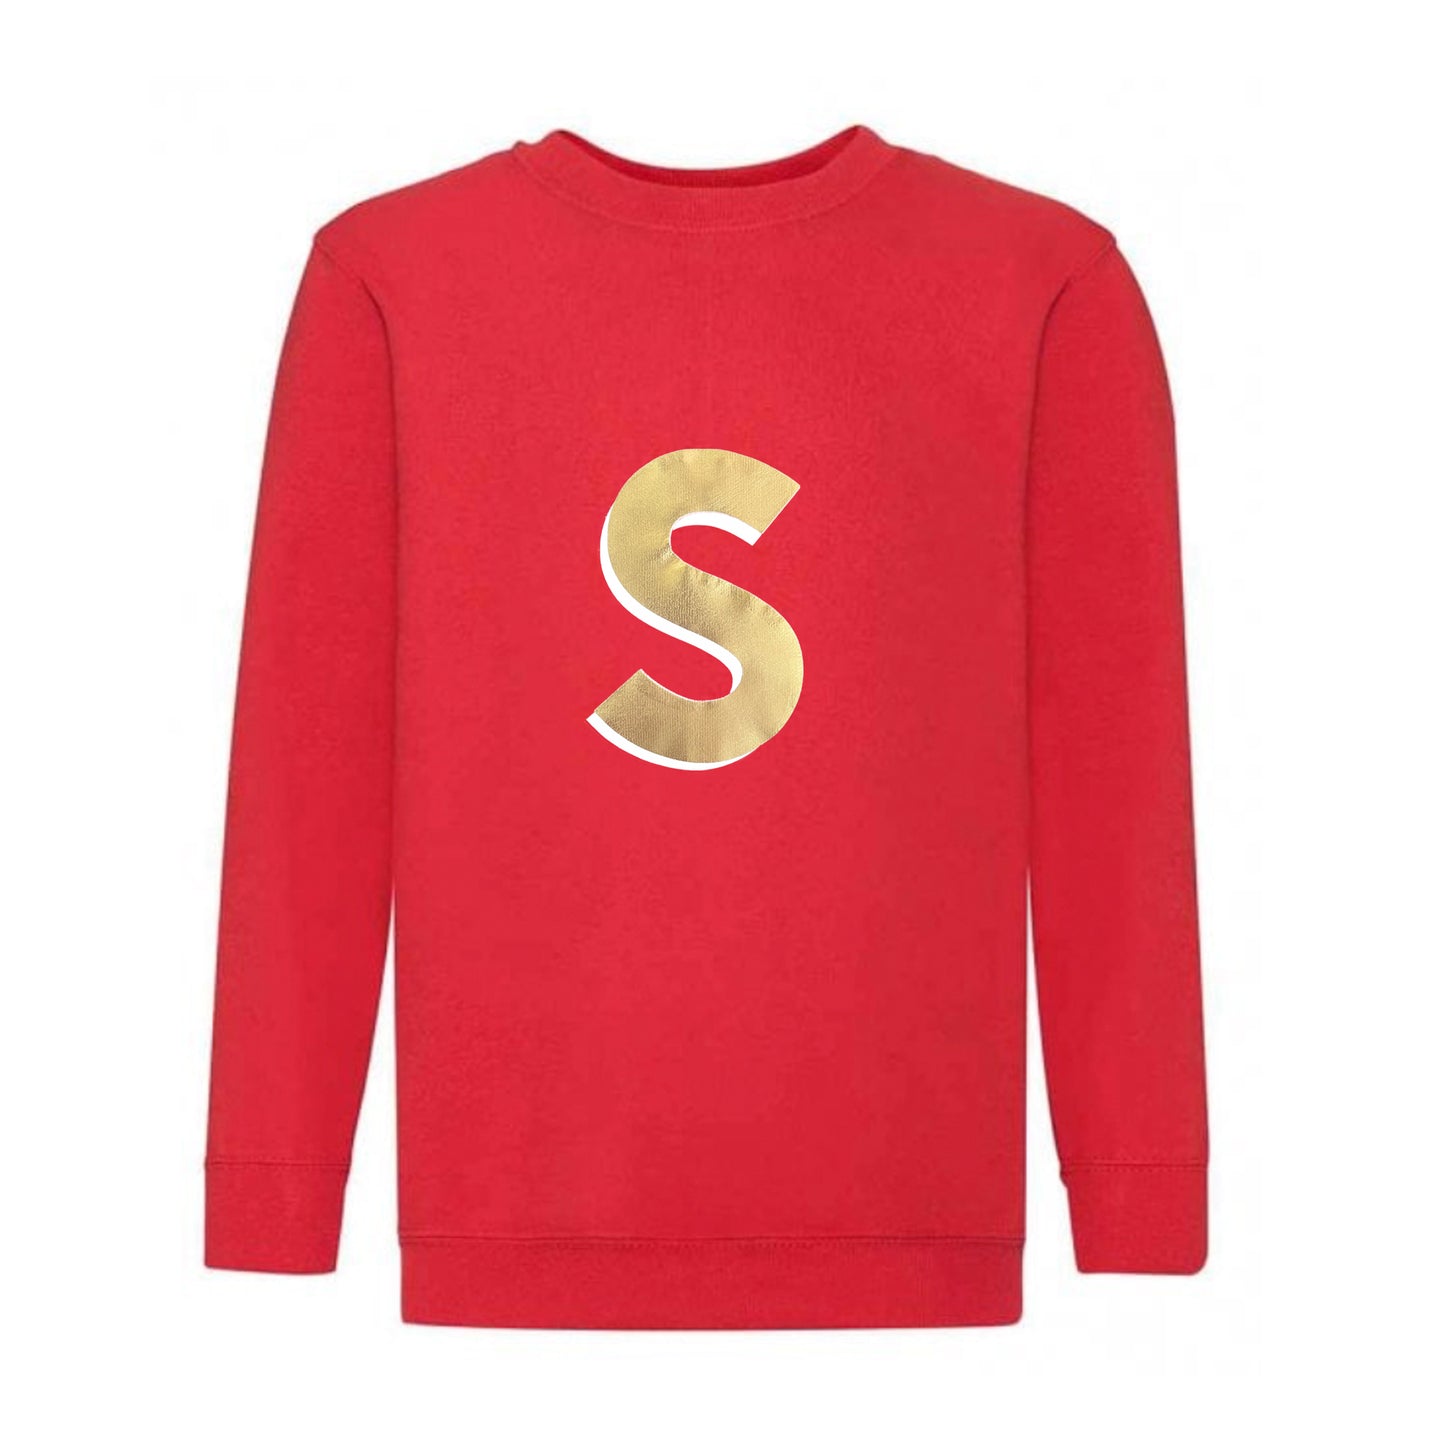 Kids Personalised Gold Initial Sweatshirt